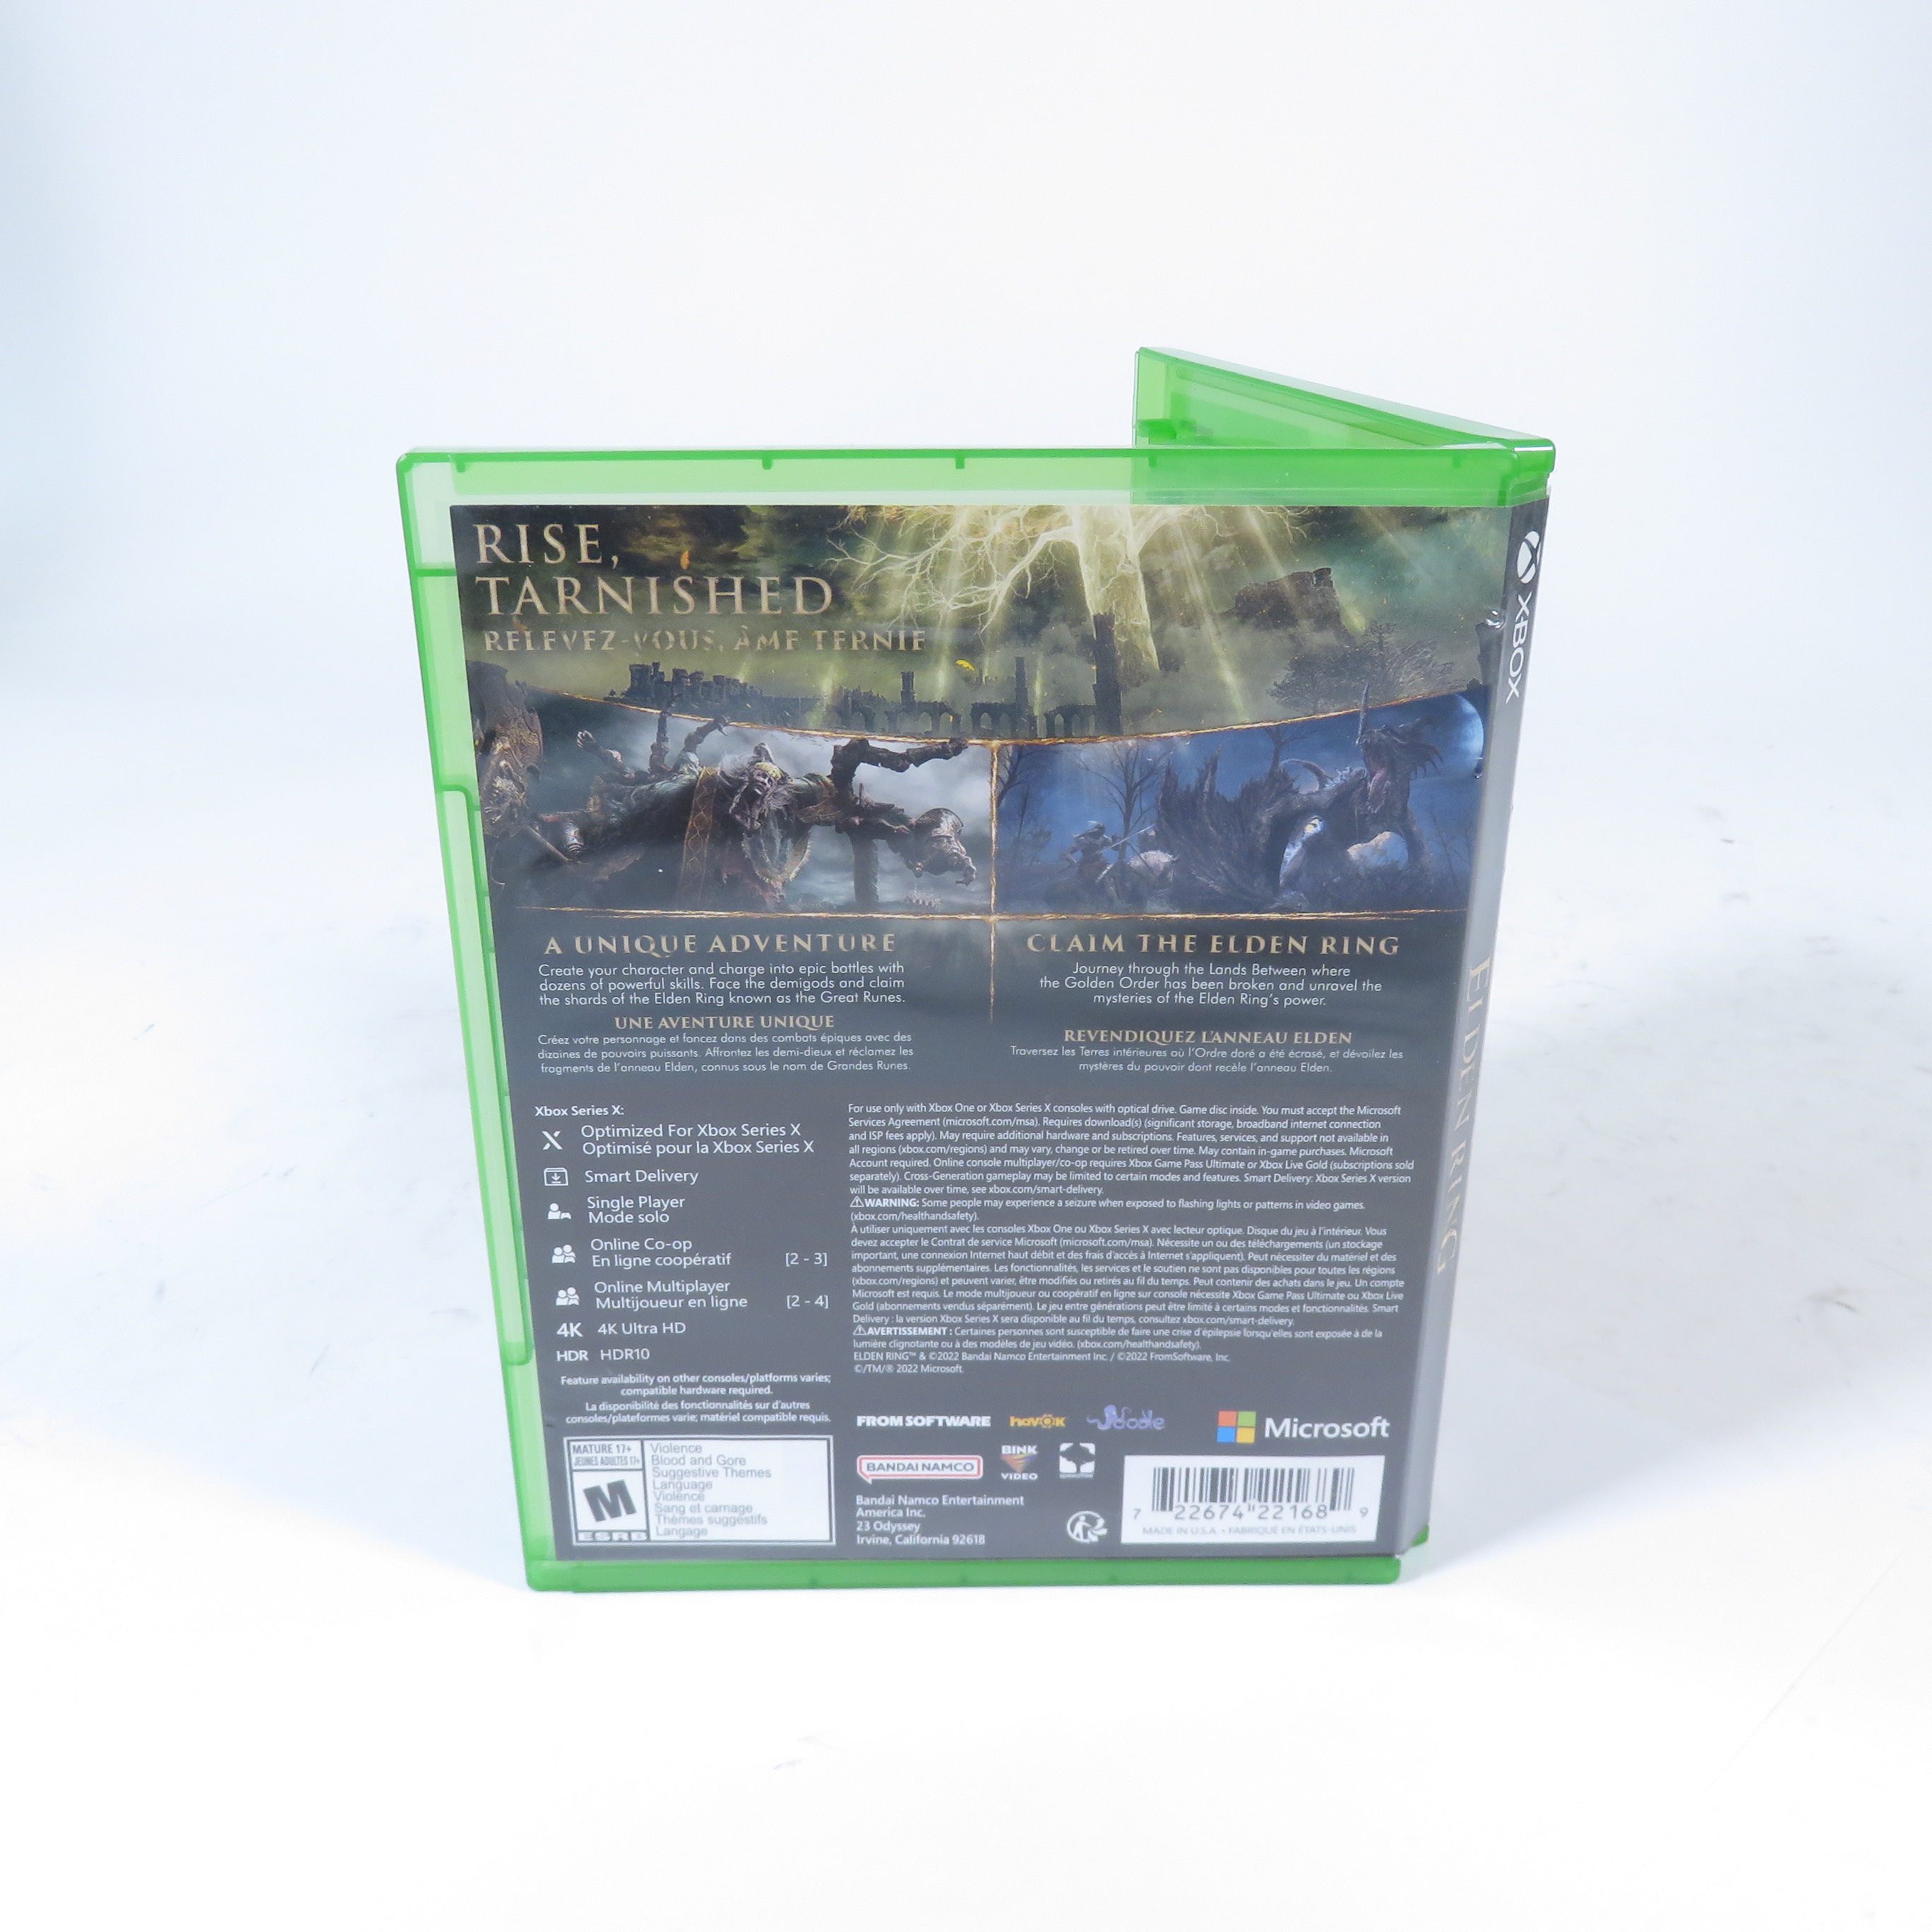  Elden Ring - Xbox Series X : Bandai Namco Games Amer: Video  Games